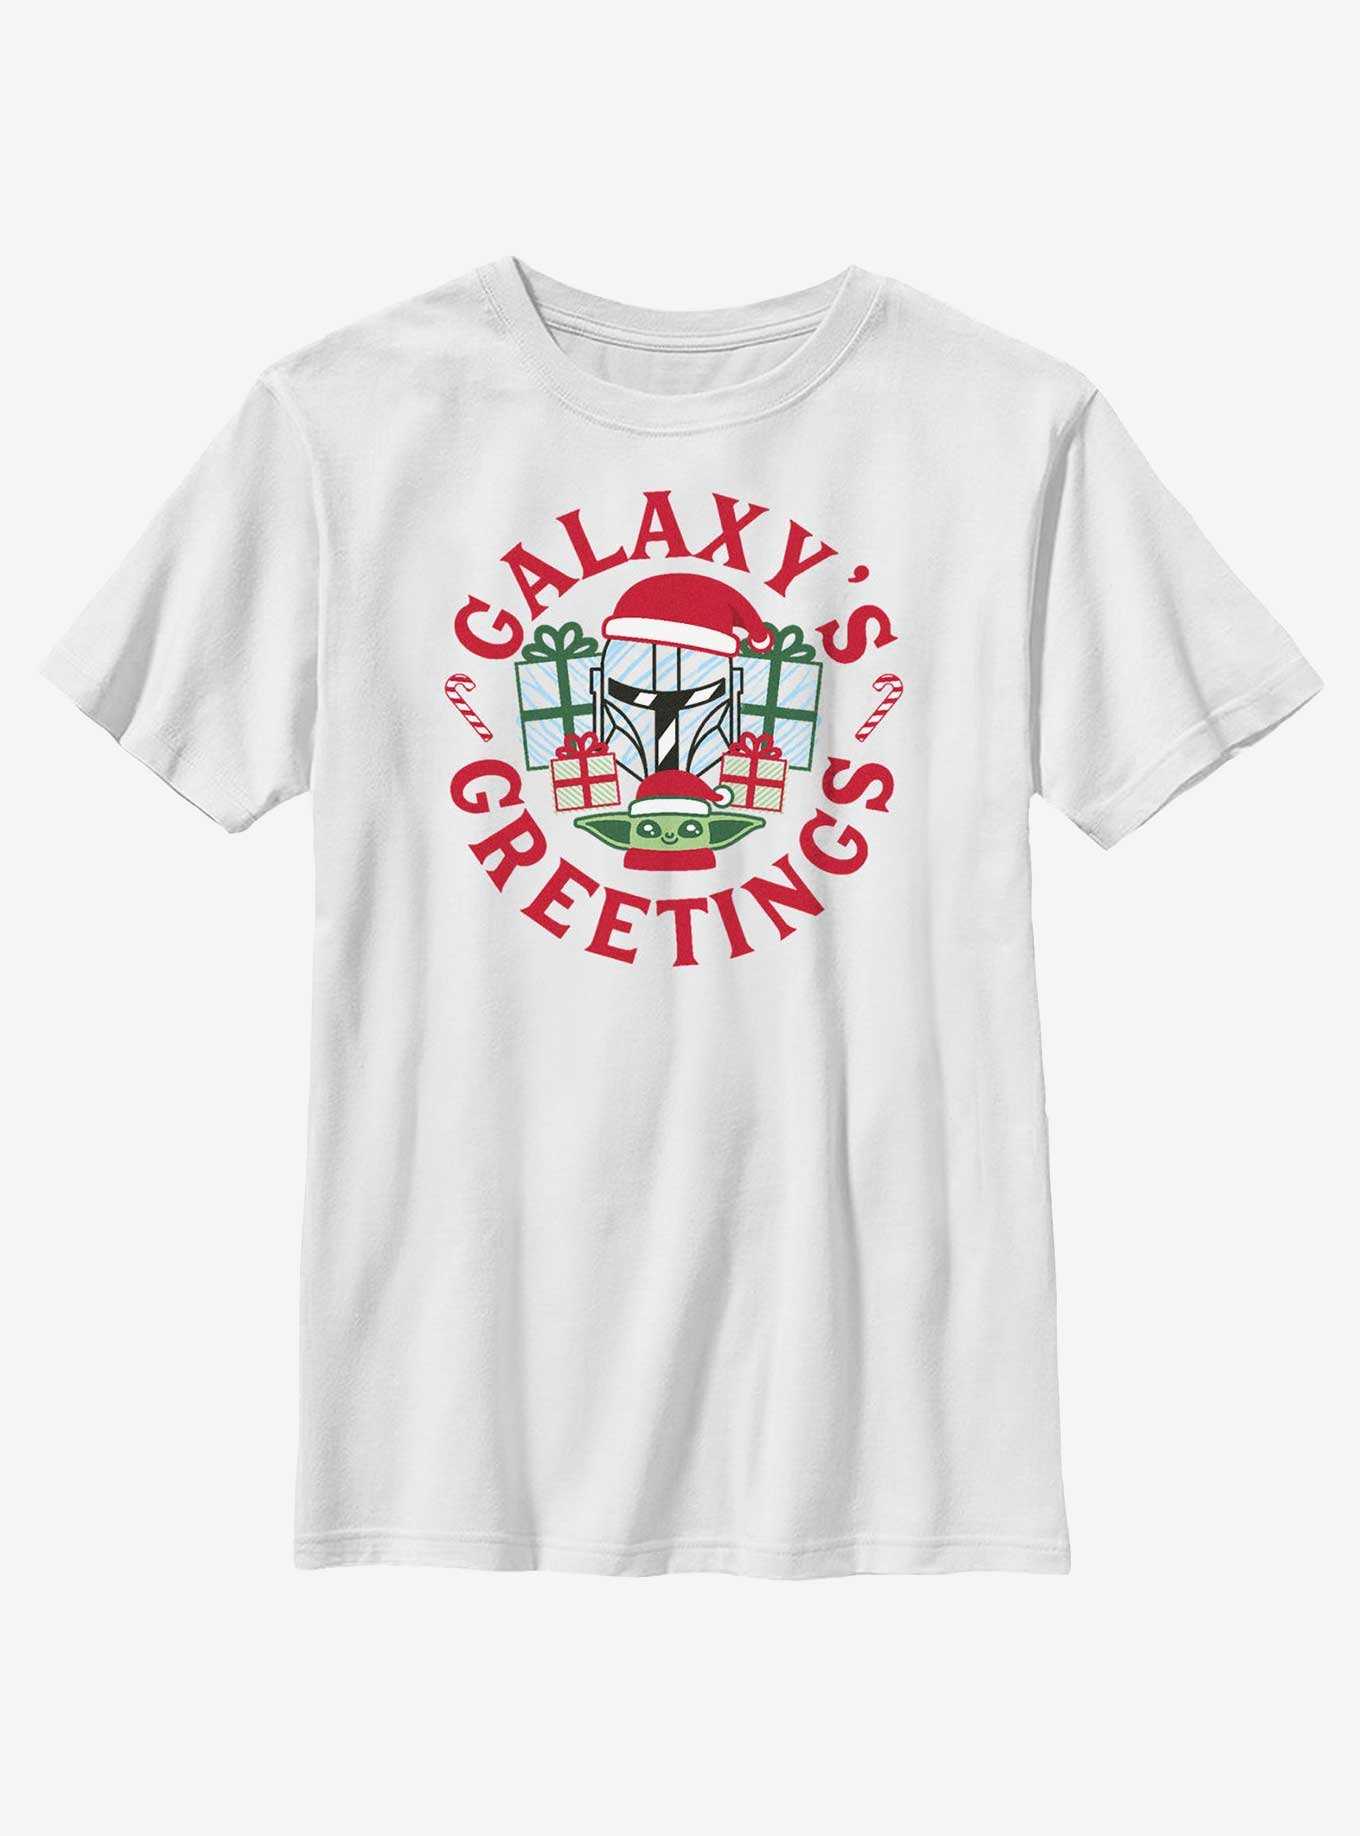 Star Wars The Mandalorian Galaxy's Greetings Youth T-Shirt, , hi-res